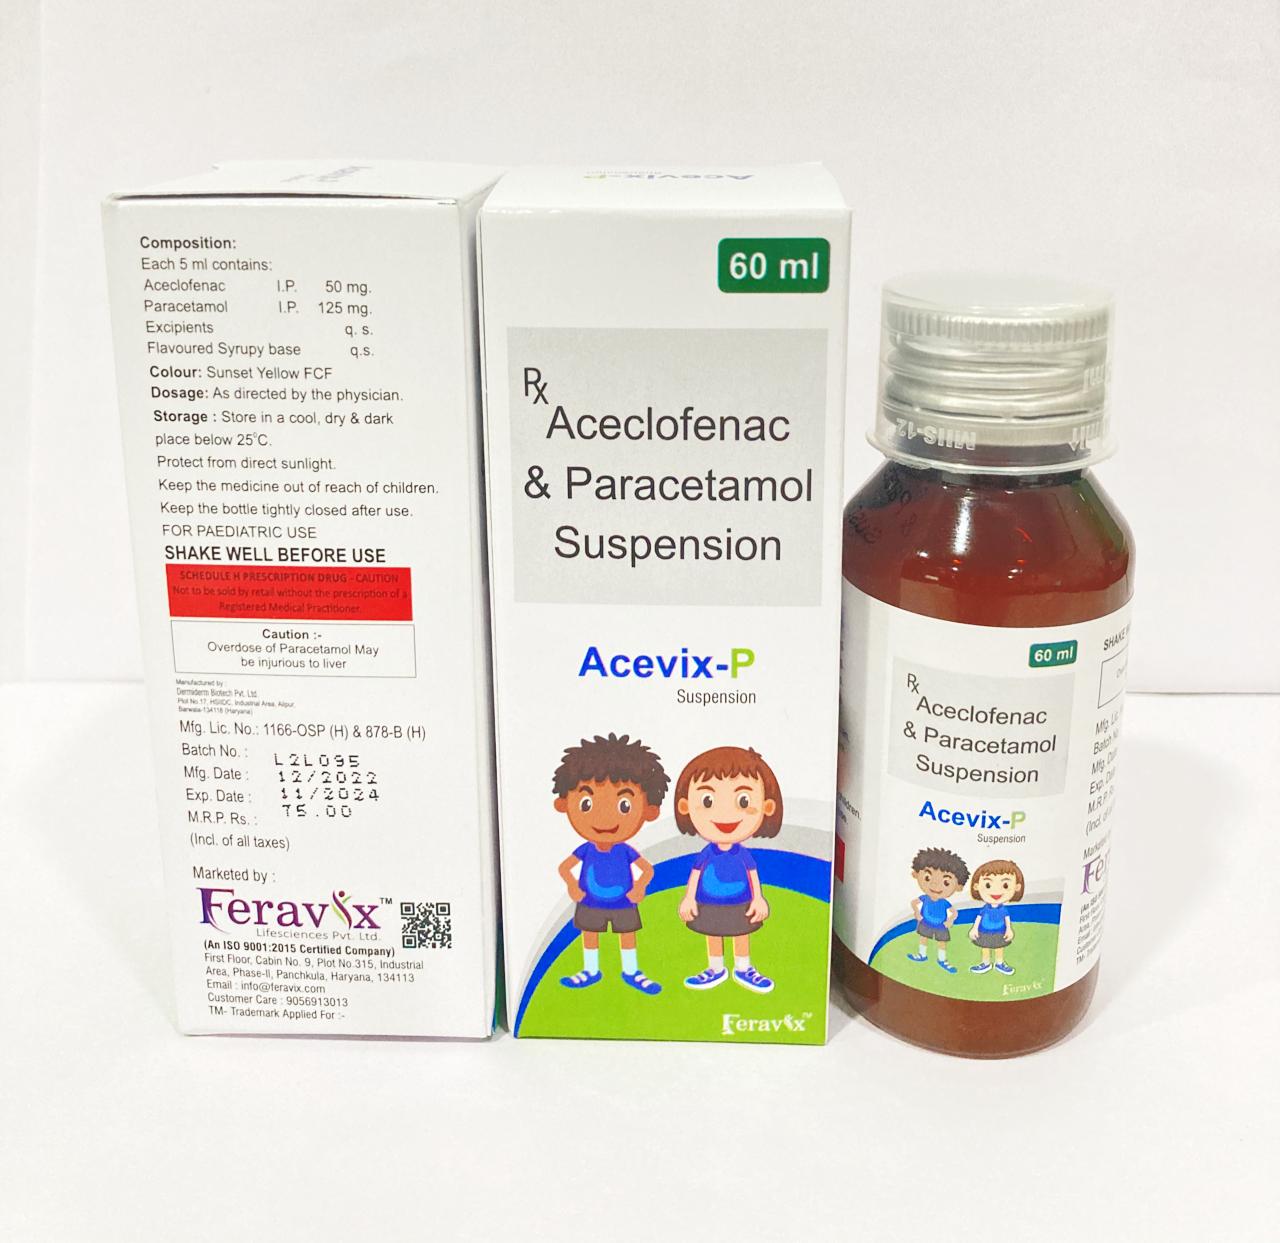 Product Name: ACEVIX P Syrup, Compositions of ACEVIX P Syrup are ACECLOFENAC 50 MG, PARACETAMOL 125 MG - Feravix Lifesciences